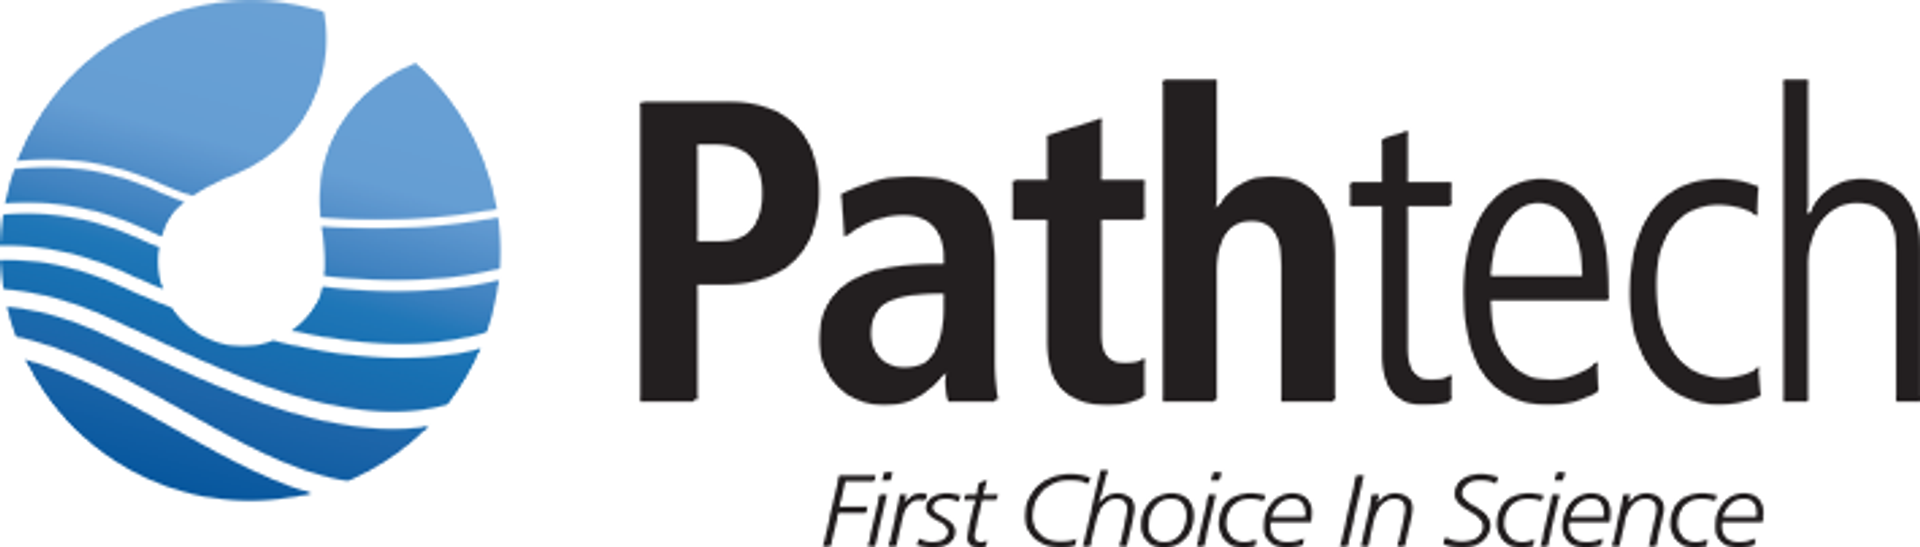 Pathtech